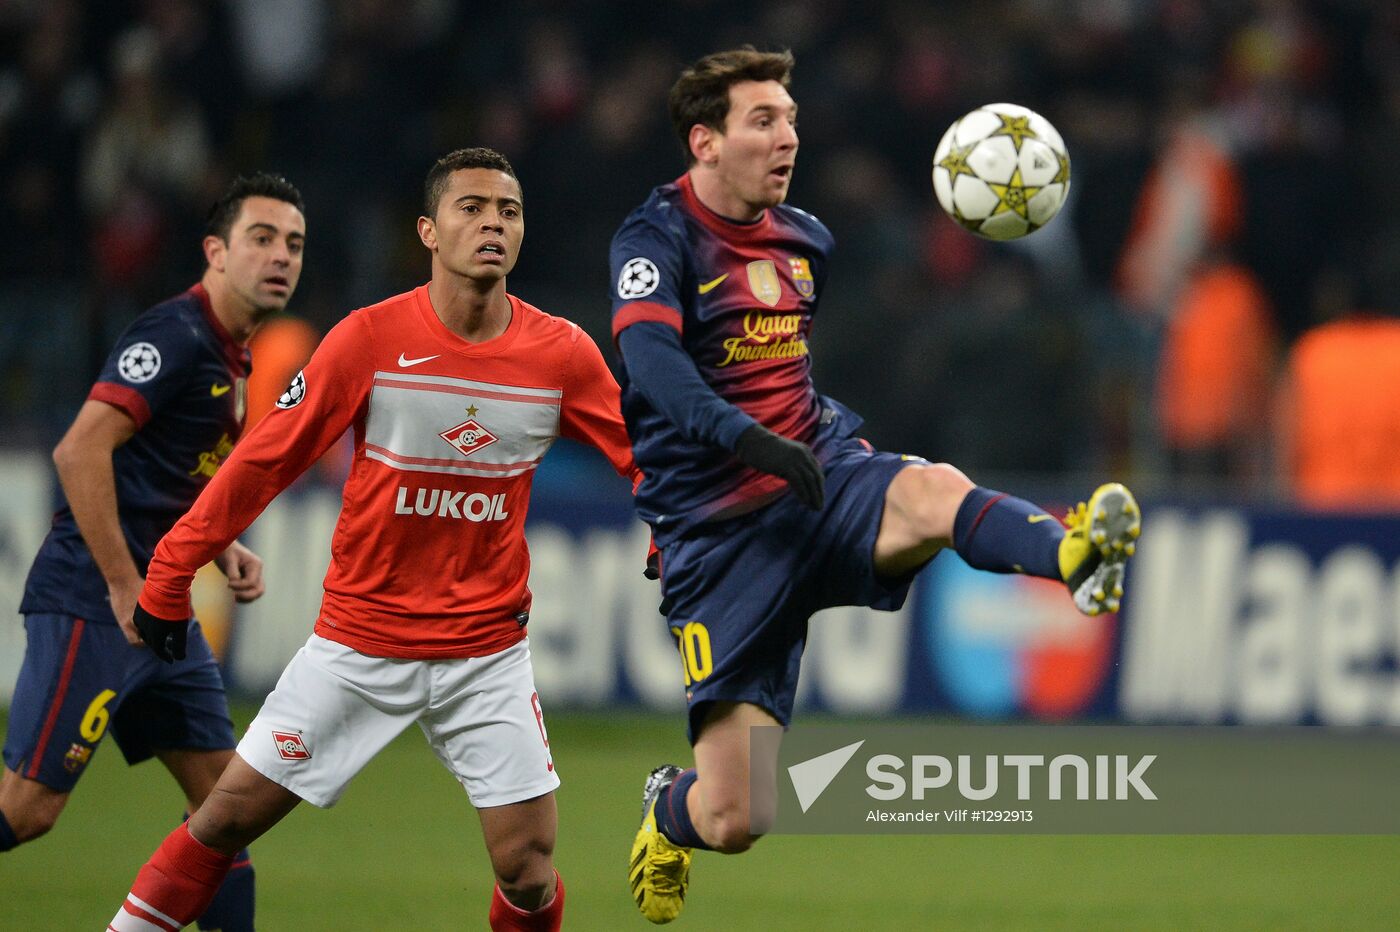 UEFA Champions League Football: Spartak vs. Barcelona